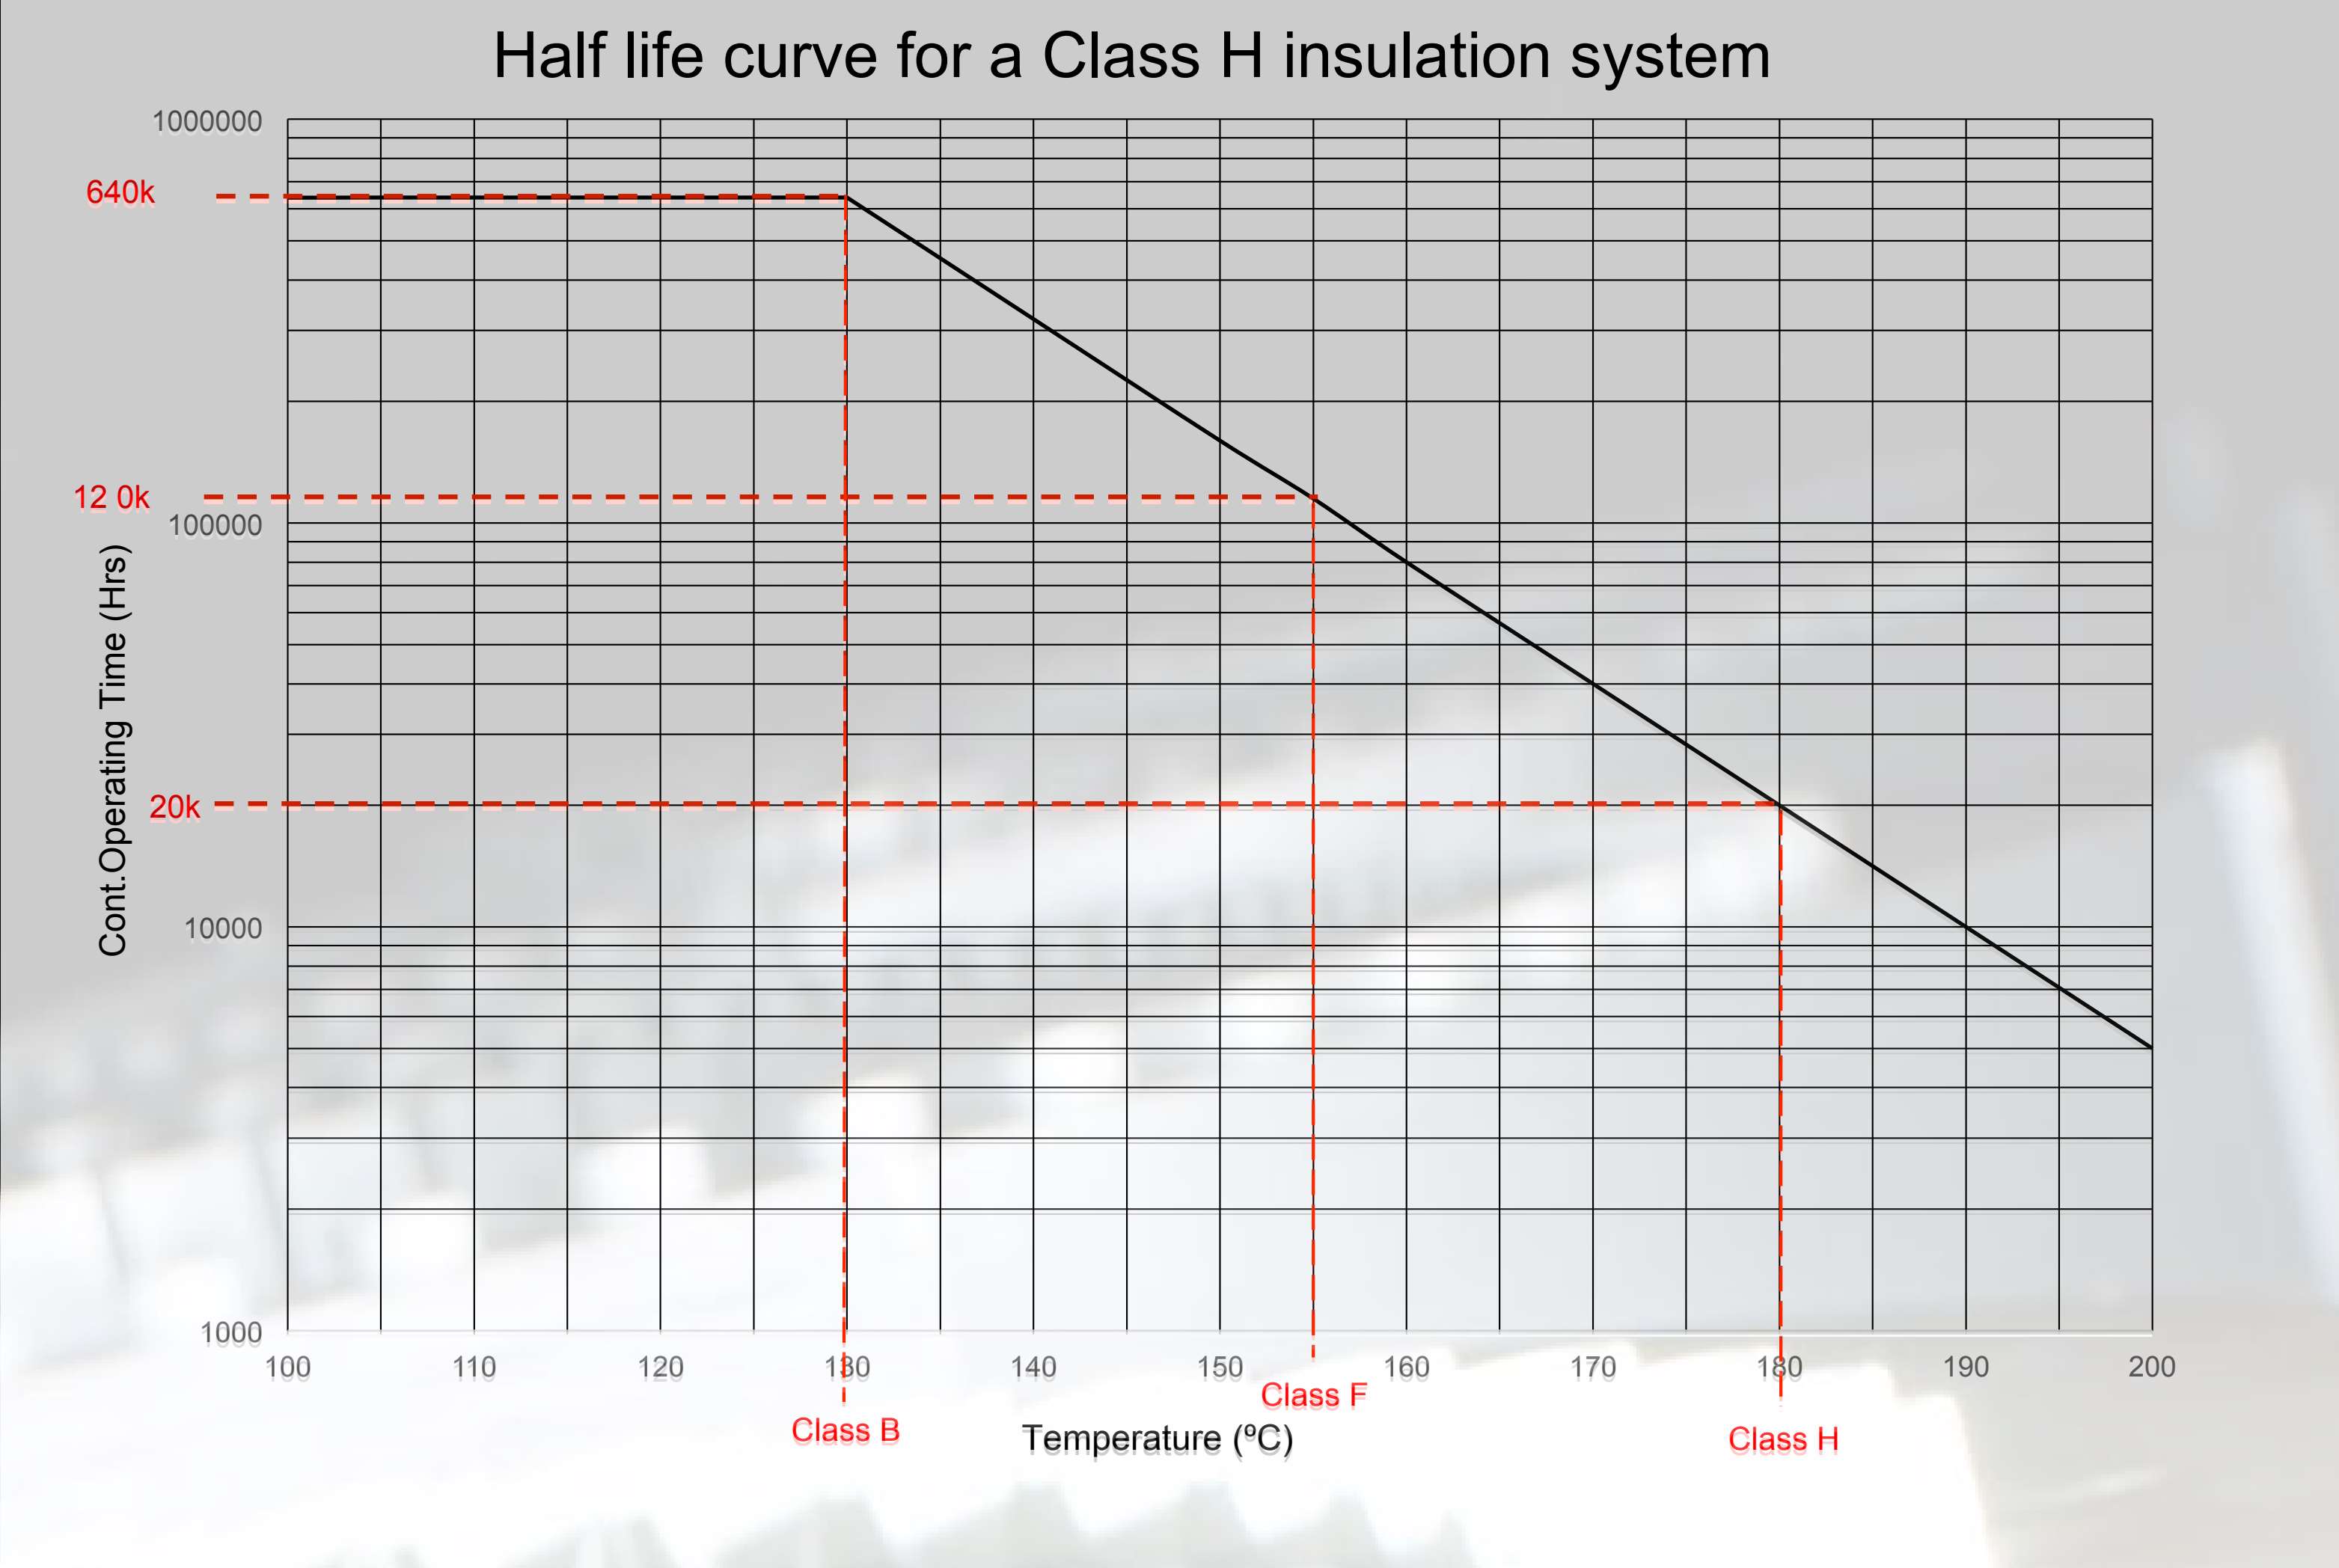 Figure 1: Insulation half-life of class H insulation system verses temperature